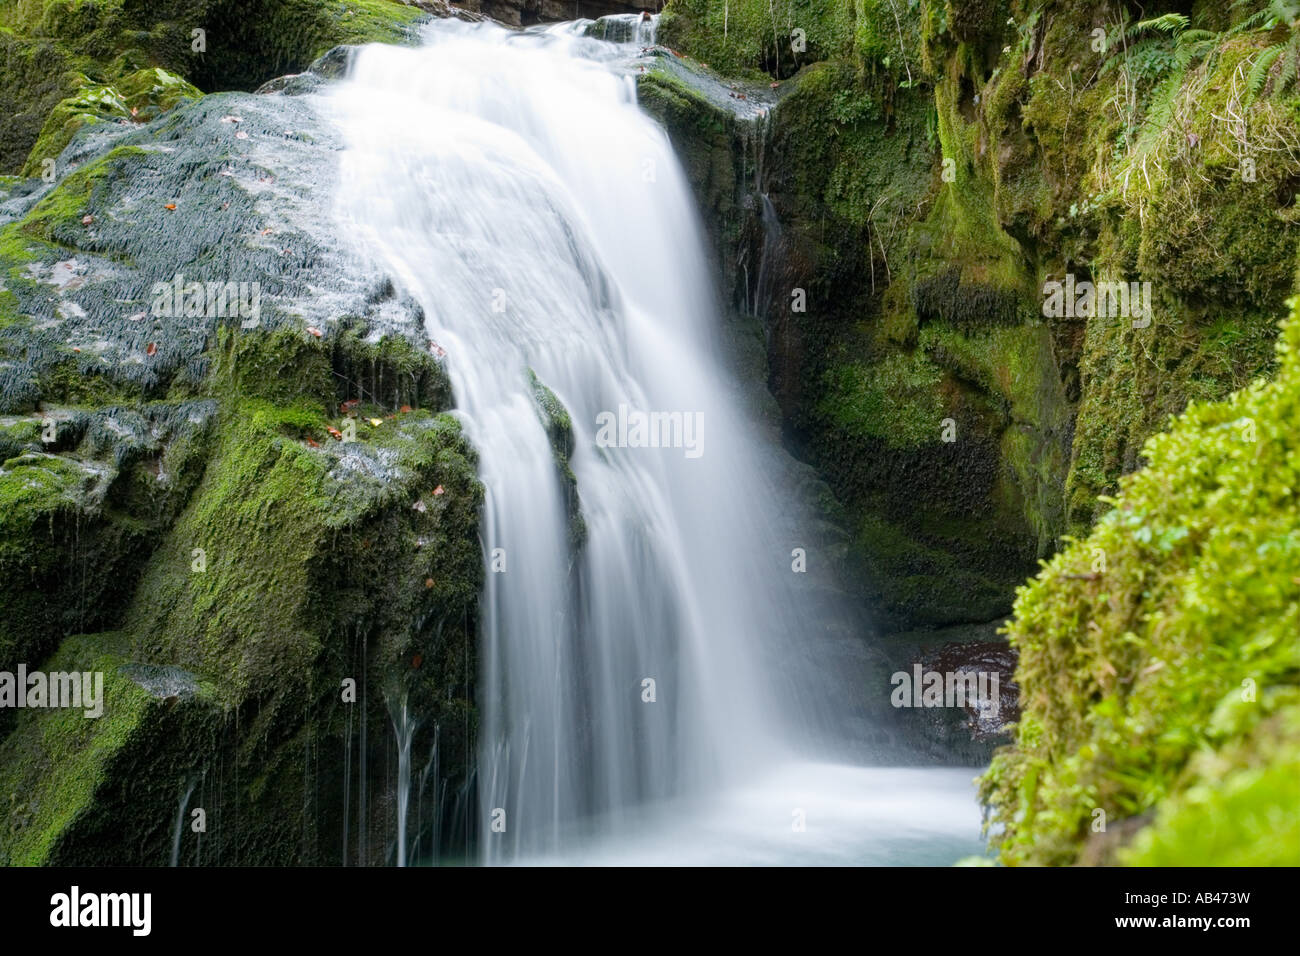 Small waterfall, Zeleni vir in Croatia, Europe Stock Photo